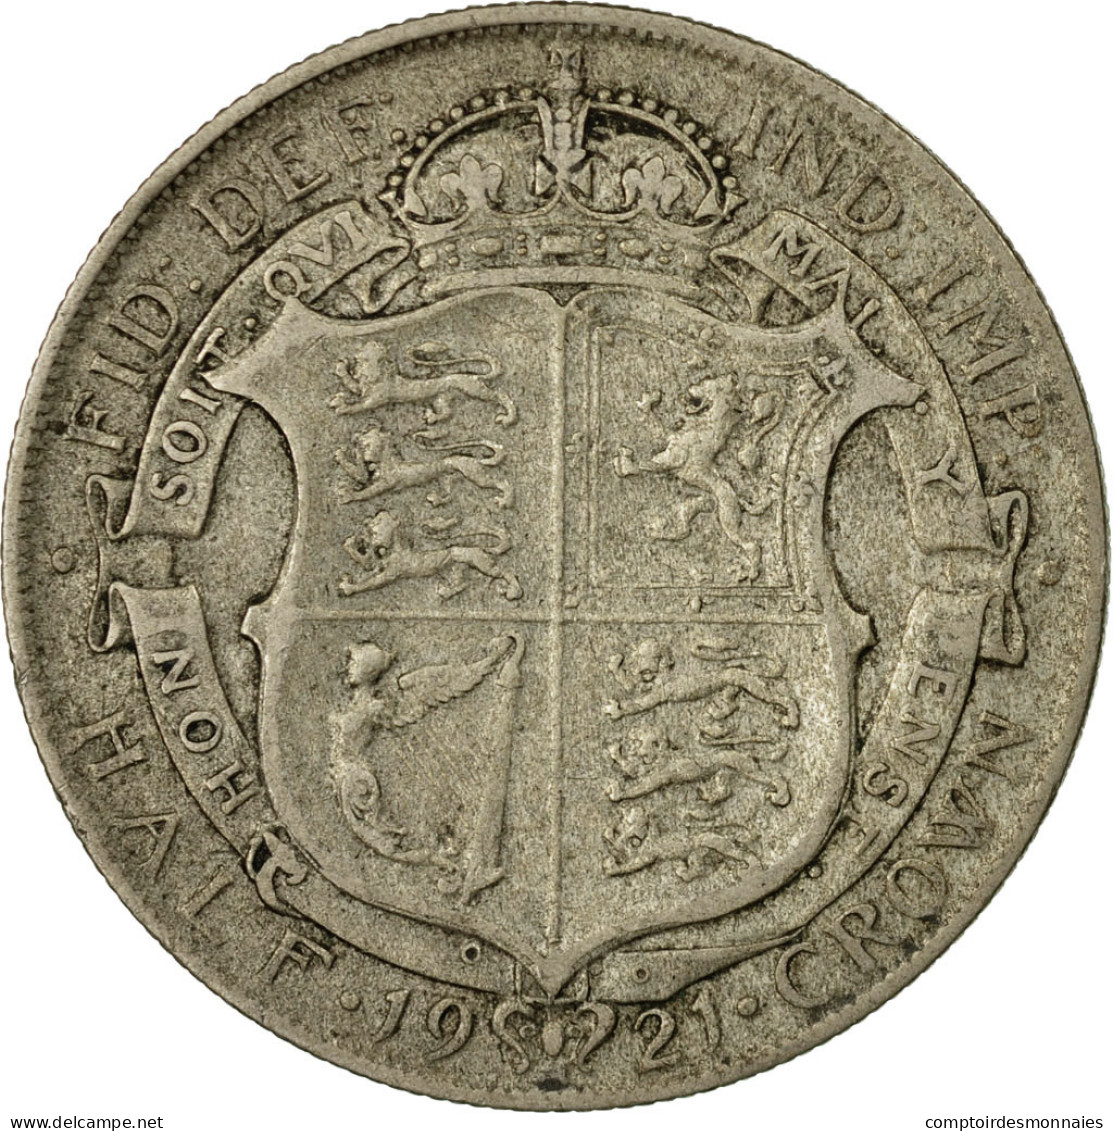 Monnaie, Grande-Bretagne, George V, 1/2 Crown, 1921, TTB, Argent, KM:818.1a - K. 1/2 Crown